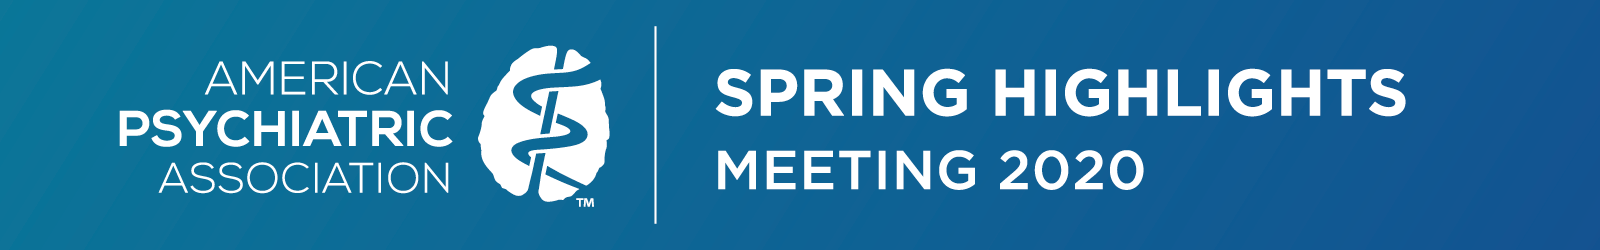 apa-spring-highlights-meeting-2020-v2.png